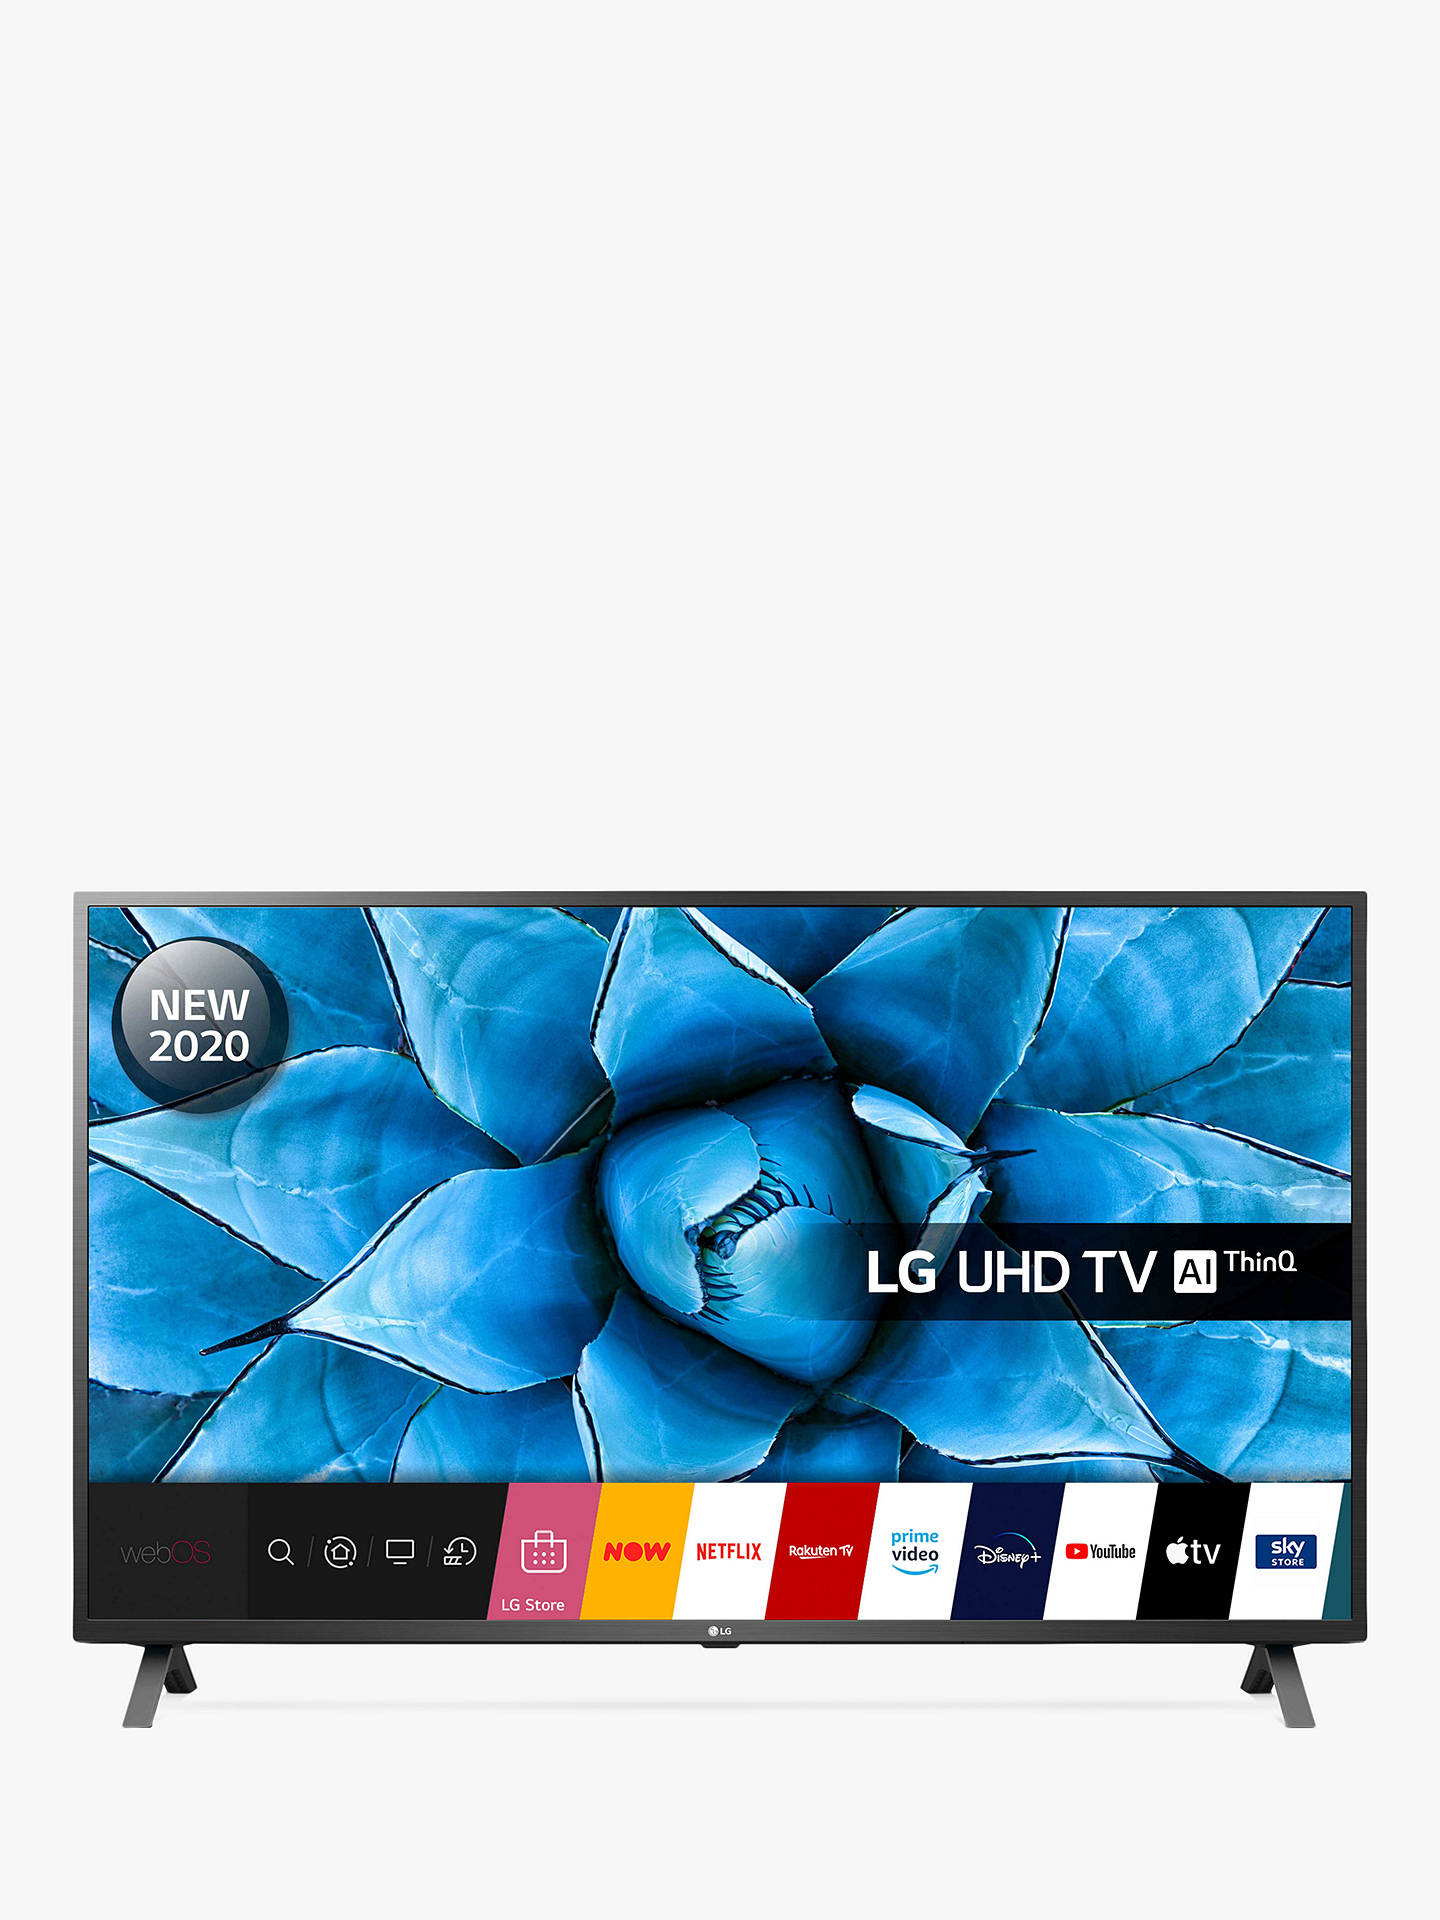 LG 55UN73006LA (2020) LED HDR 4K Ultra HD Smart TV, 55 inch with Freeview HD/Freesat HD, Ceramic ...